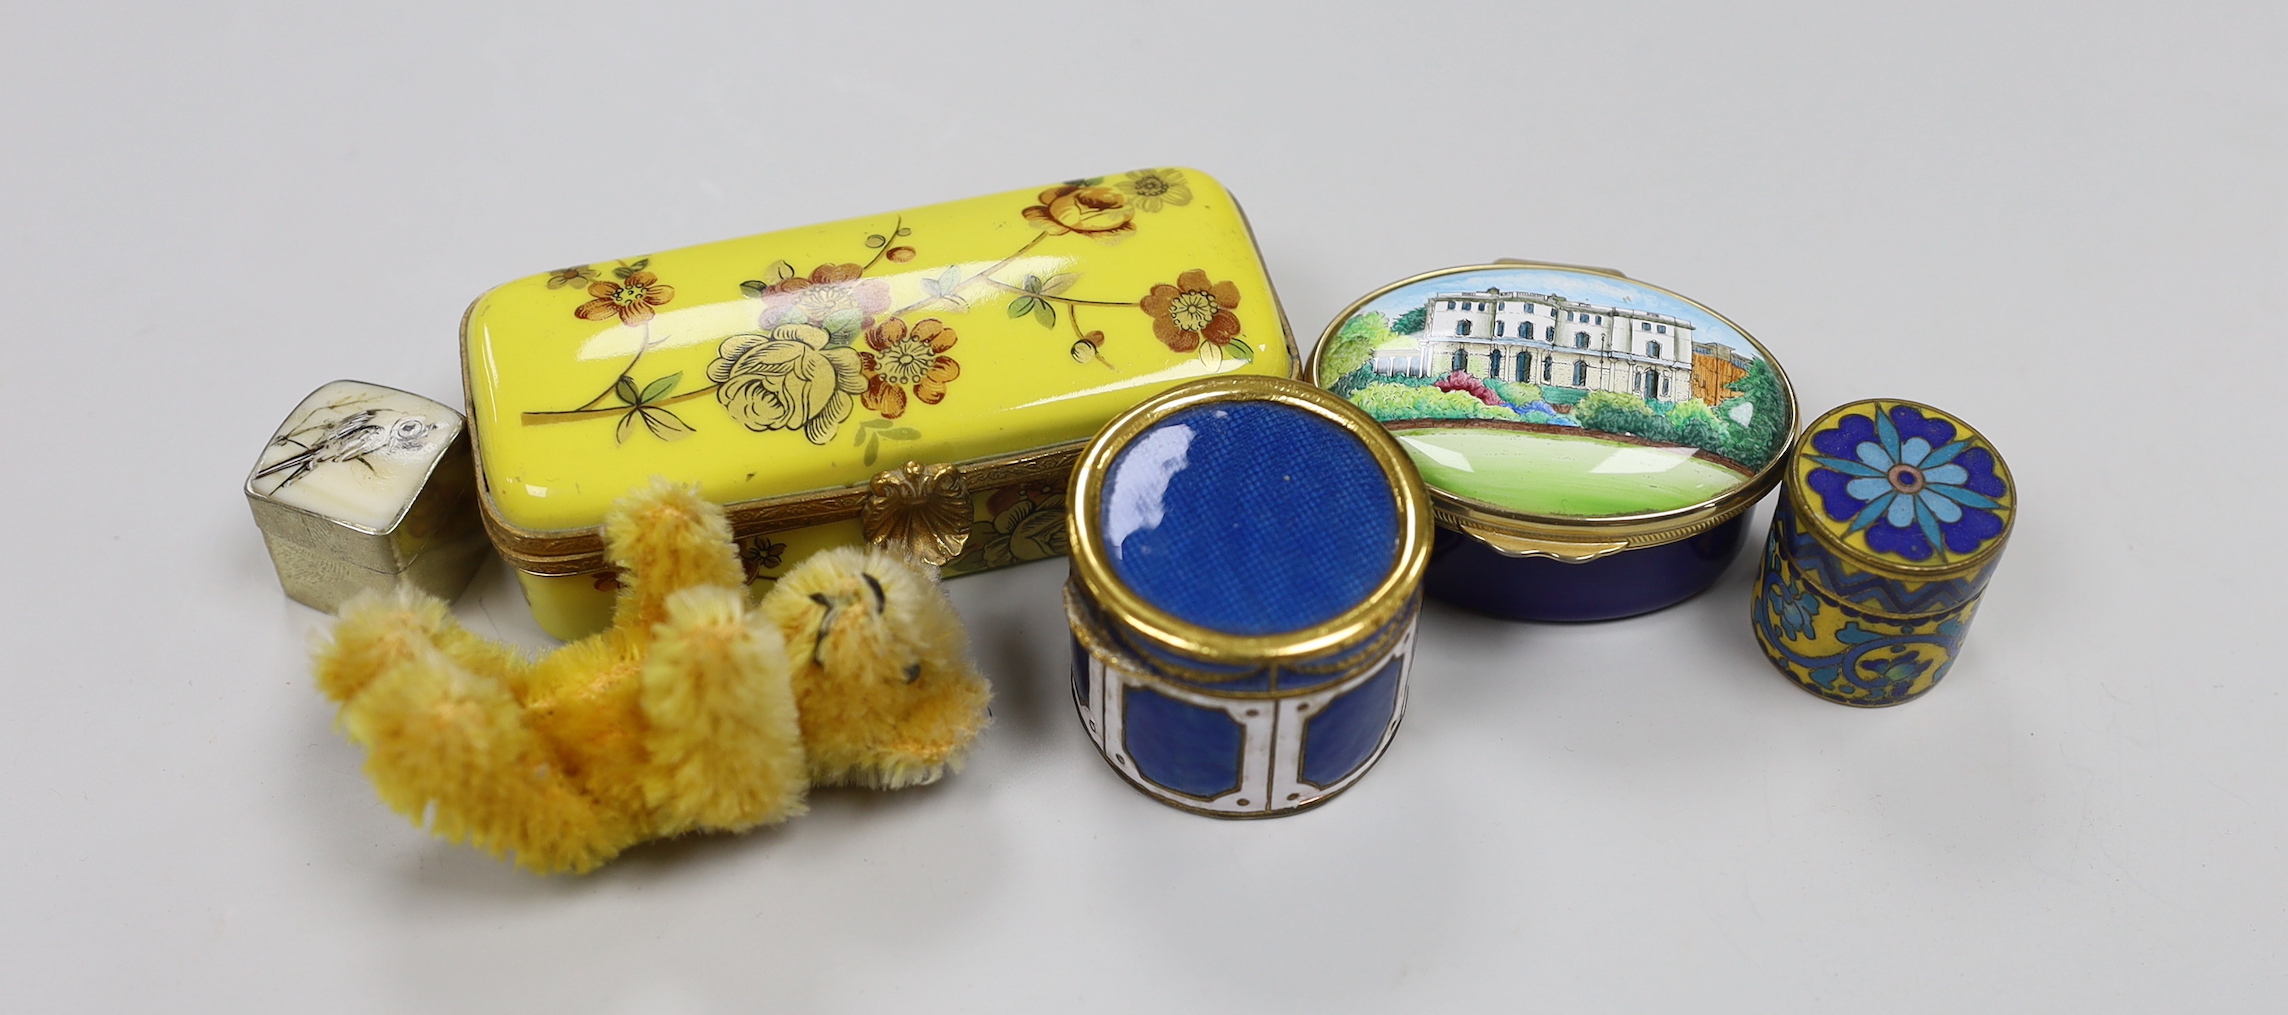 A Schuco miniature bear and various enamel or porcelain trinket boxes                                                                                                                                                       